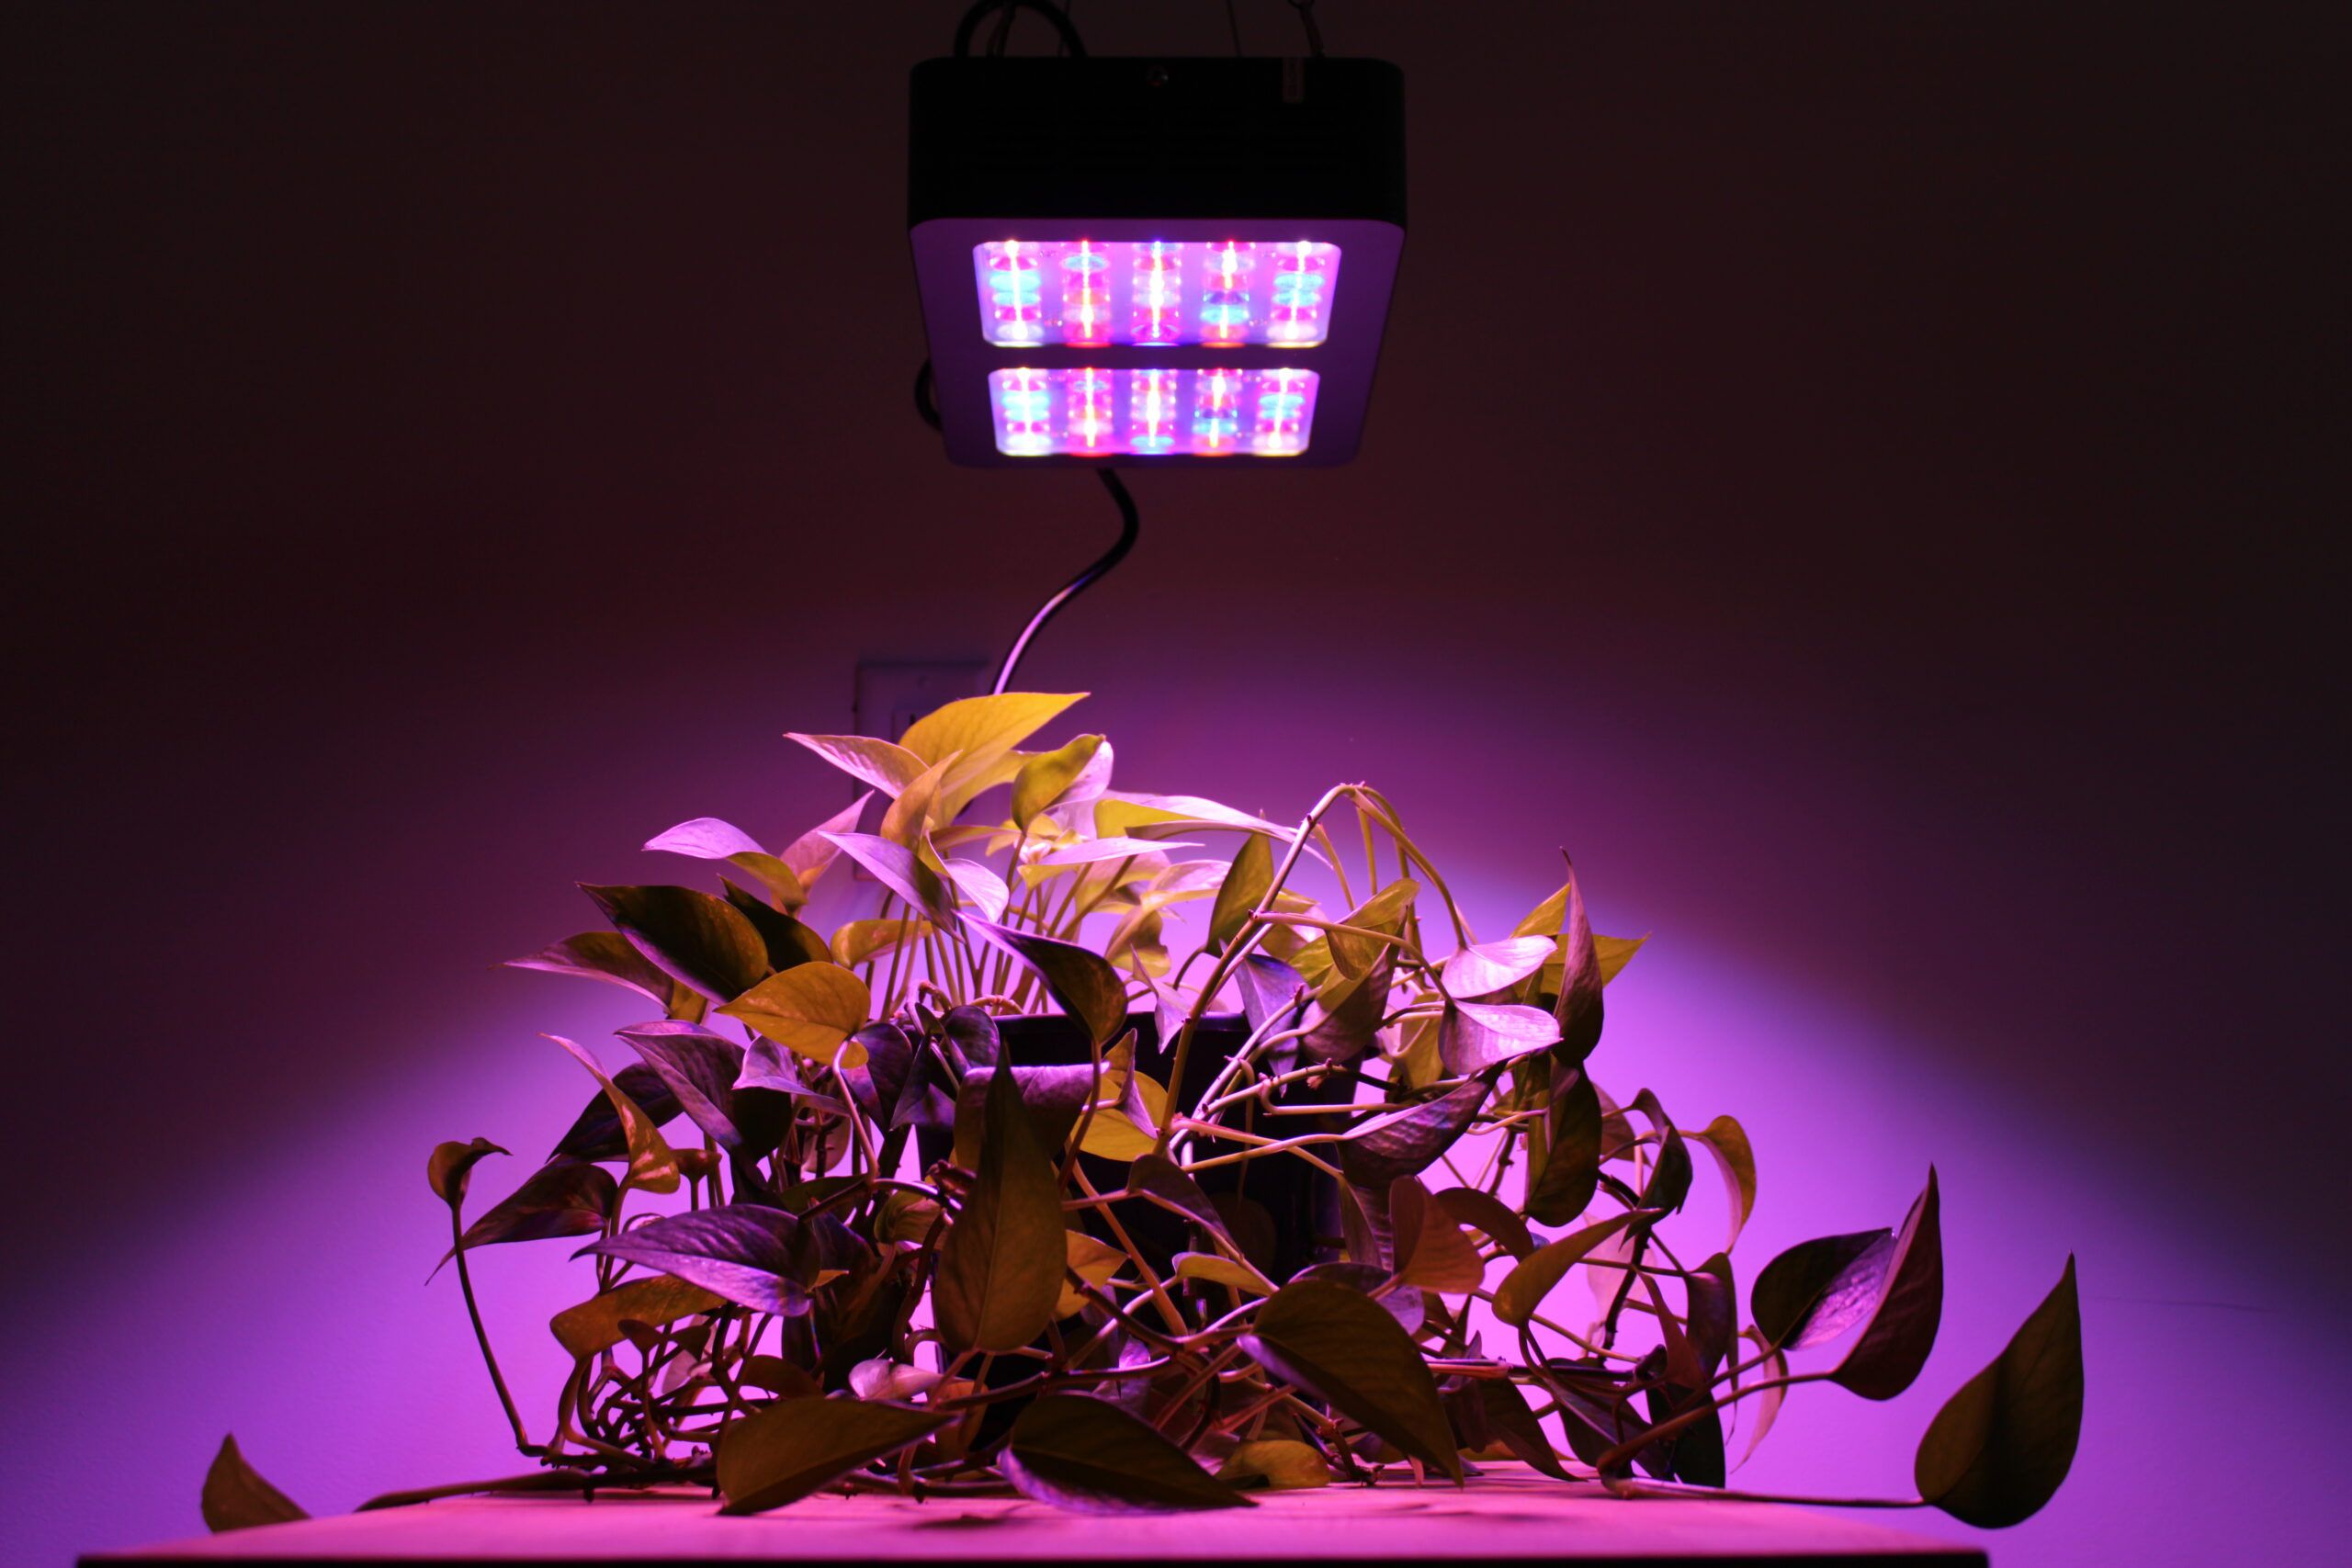 LED Grow Light Advantages